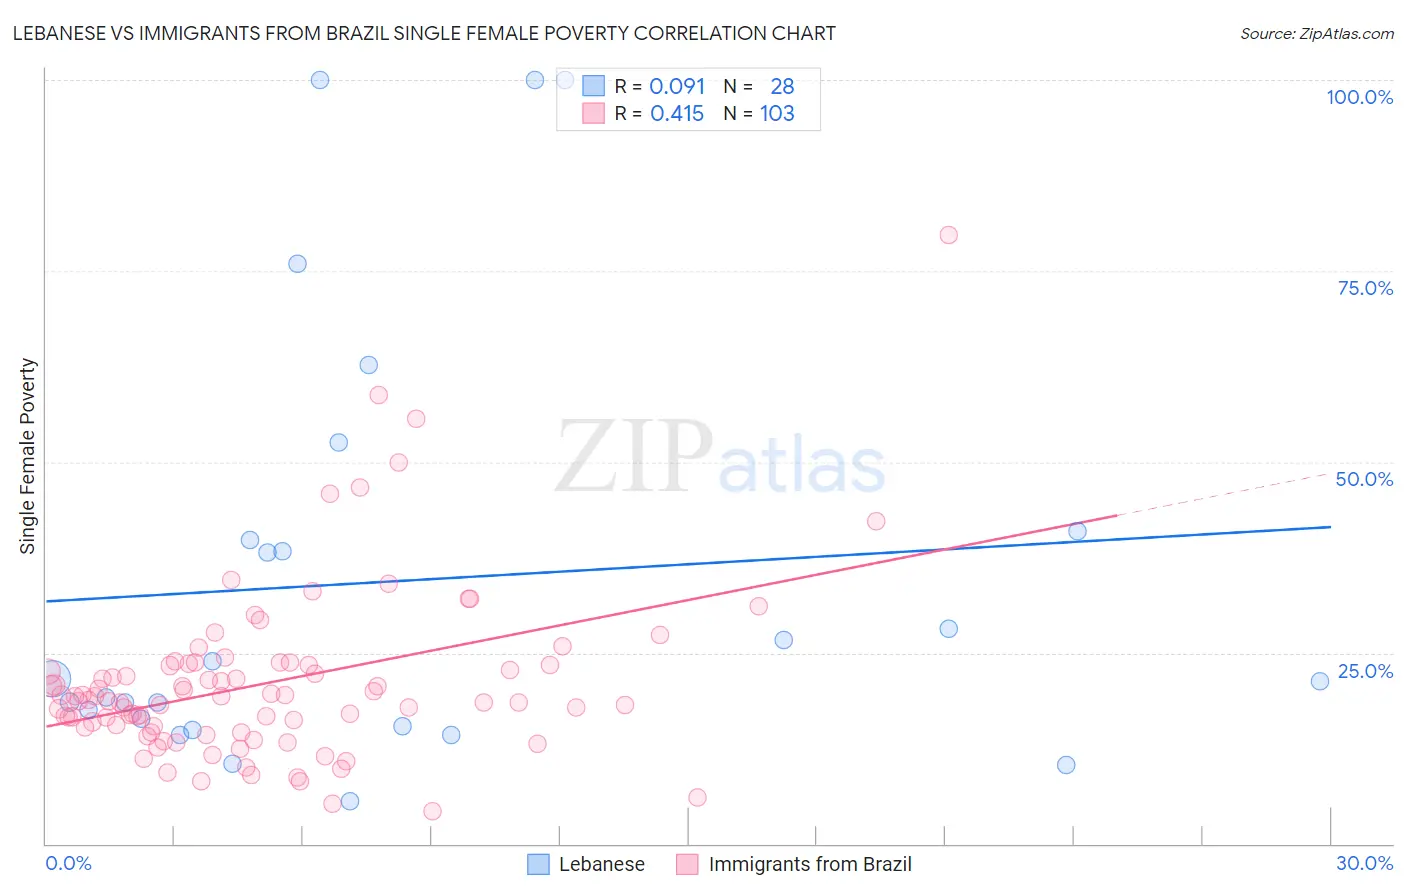 Lebanese vs Immigrants from Brazil Single Female Poverty